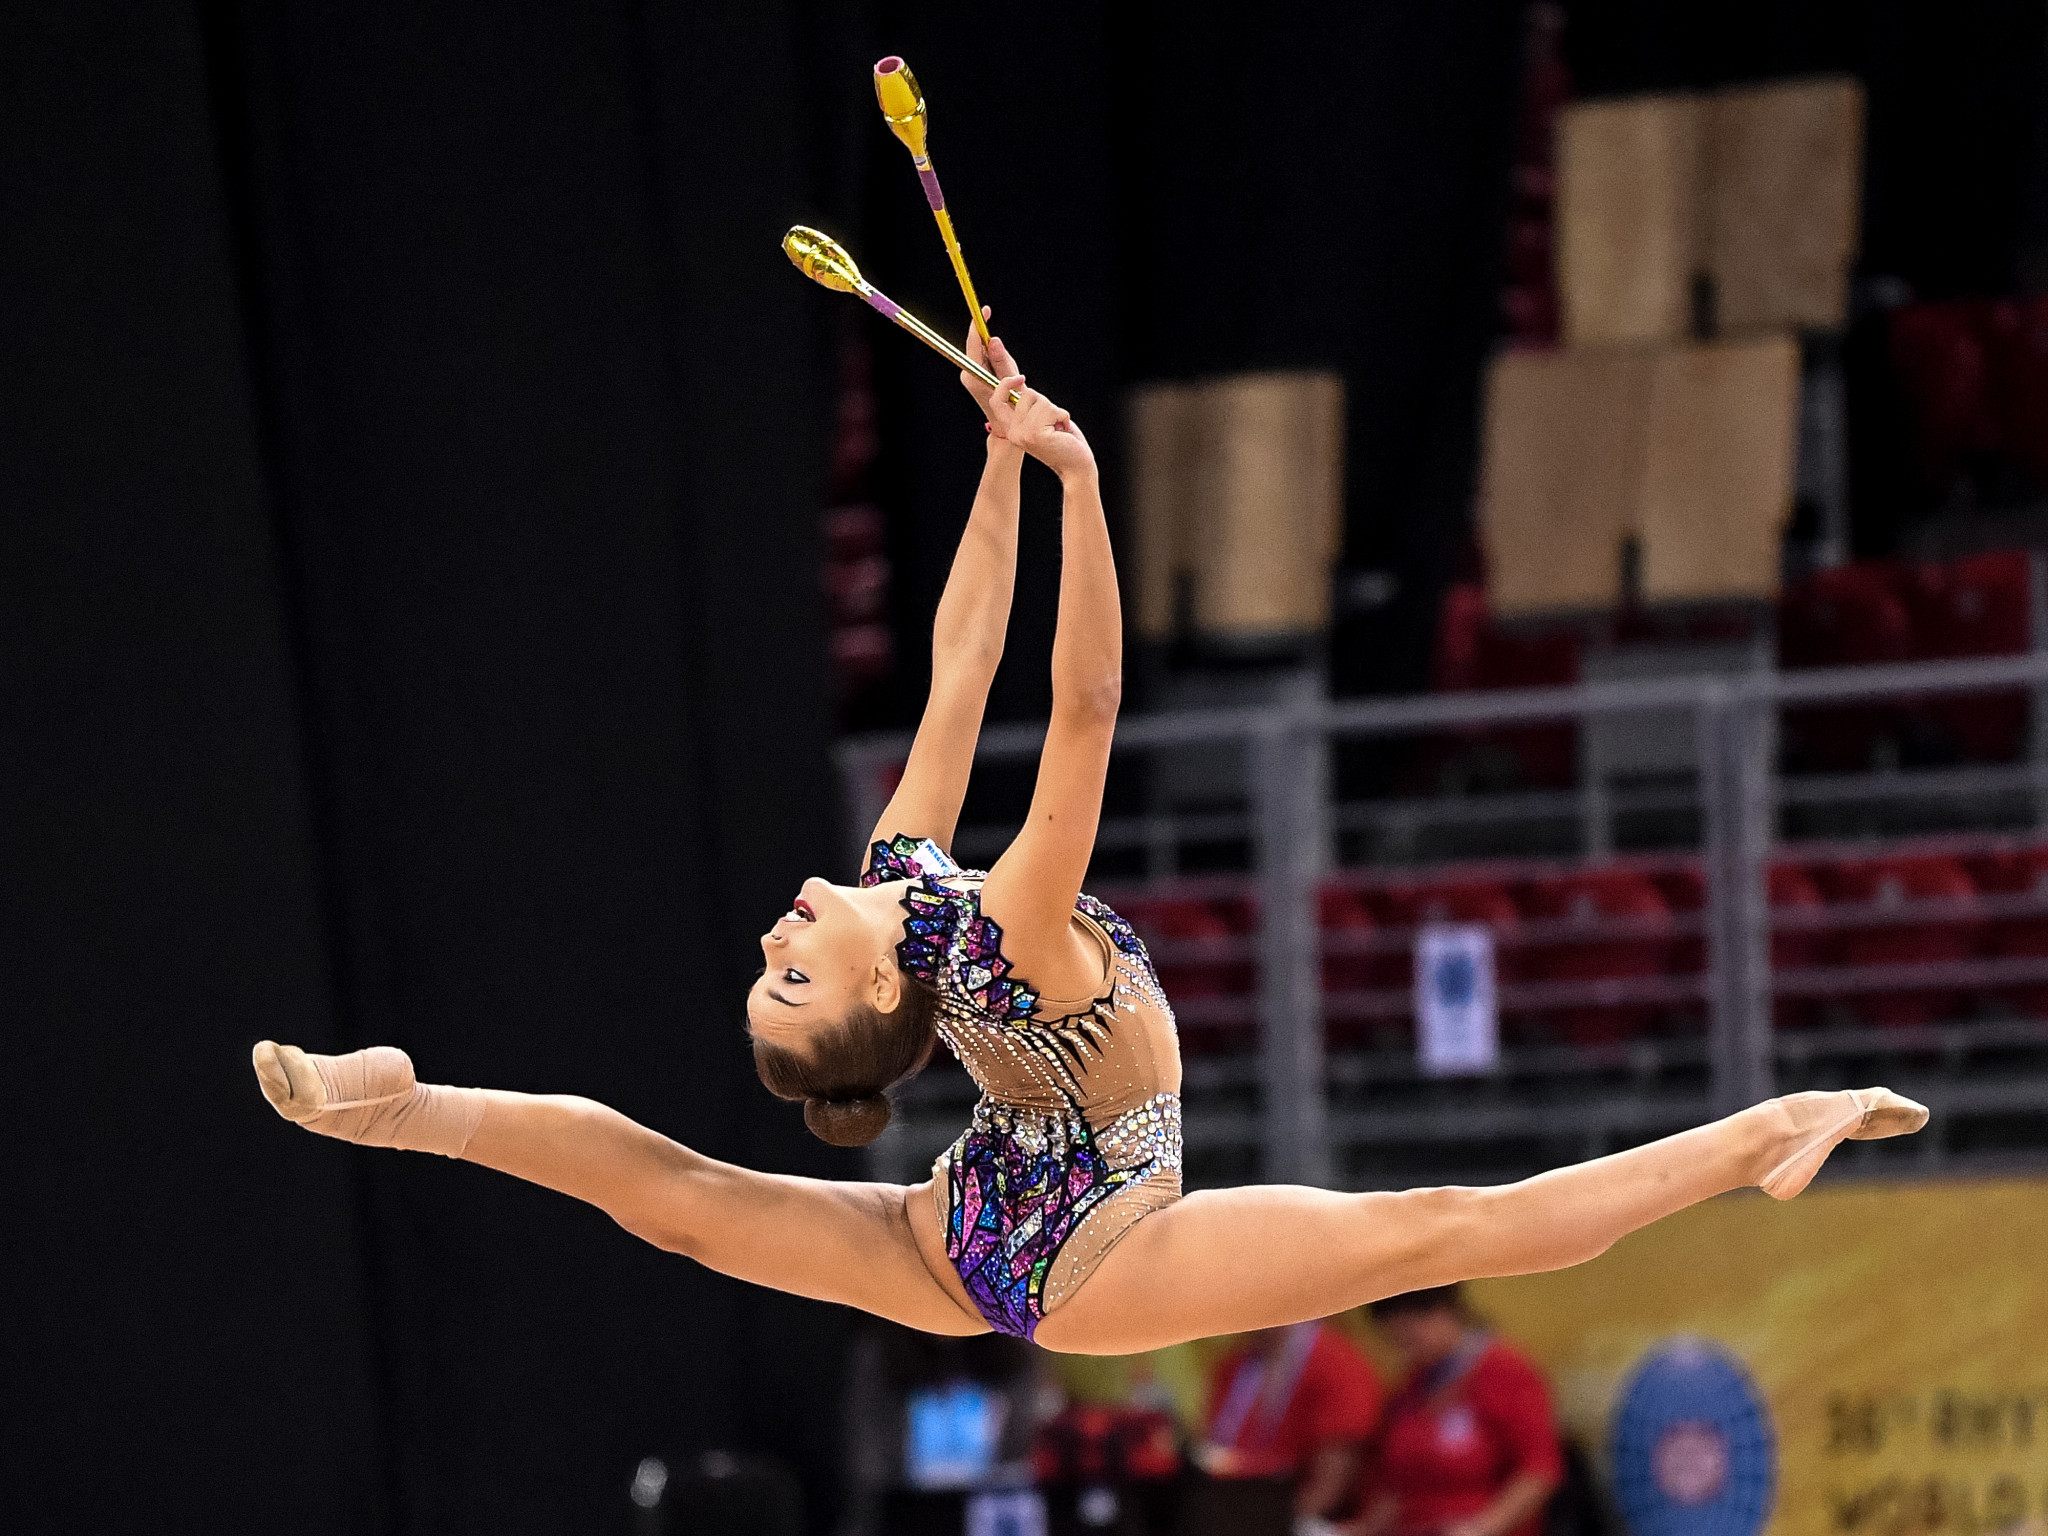 Averina earns all-around title at Rhythmic Gymnastics World Cup in Baku